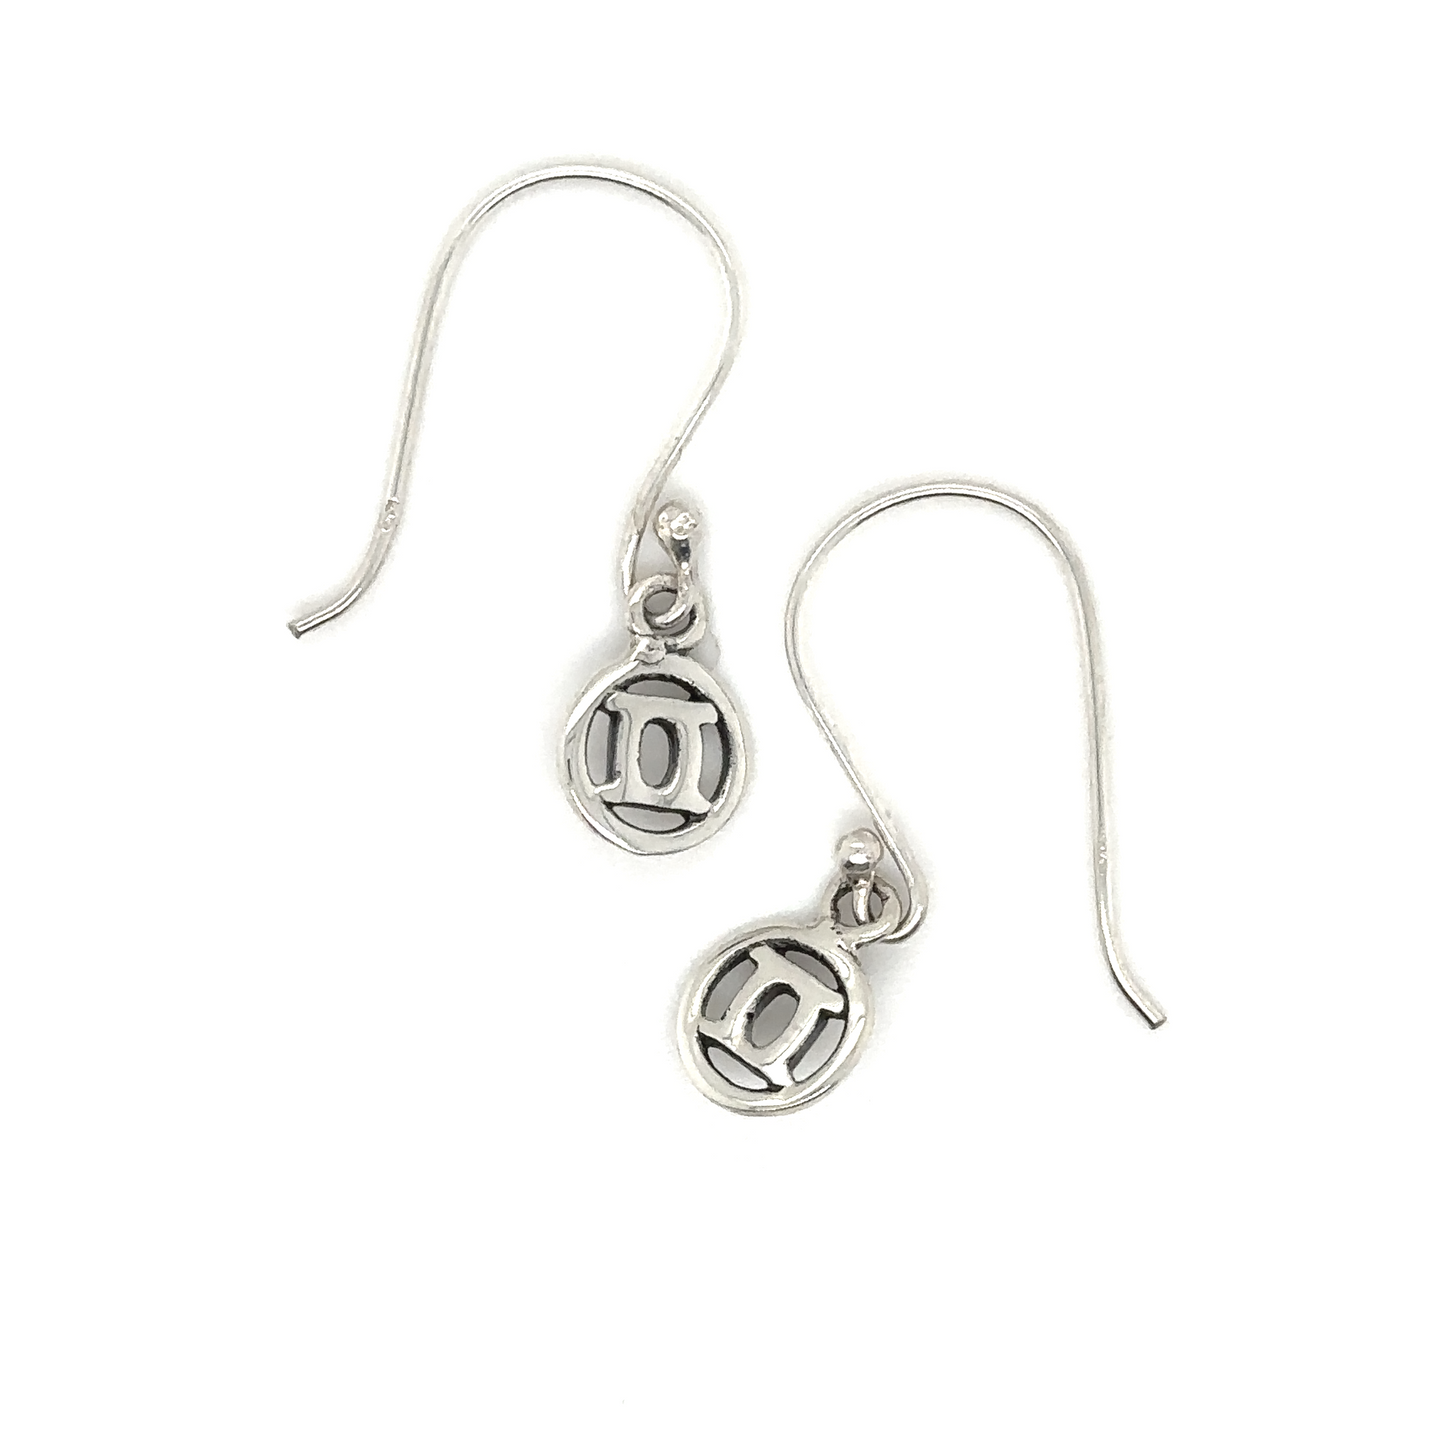 A pair of Super Silver Gemini Zodiac Earrings.